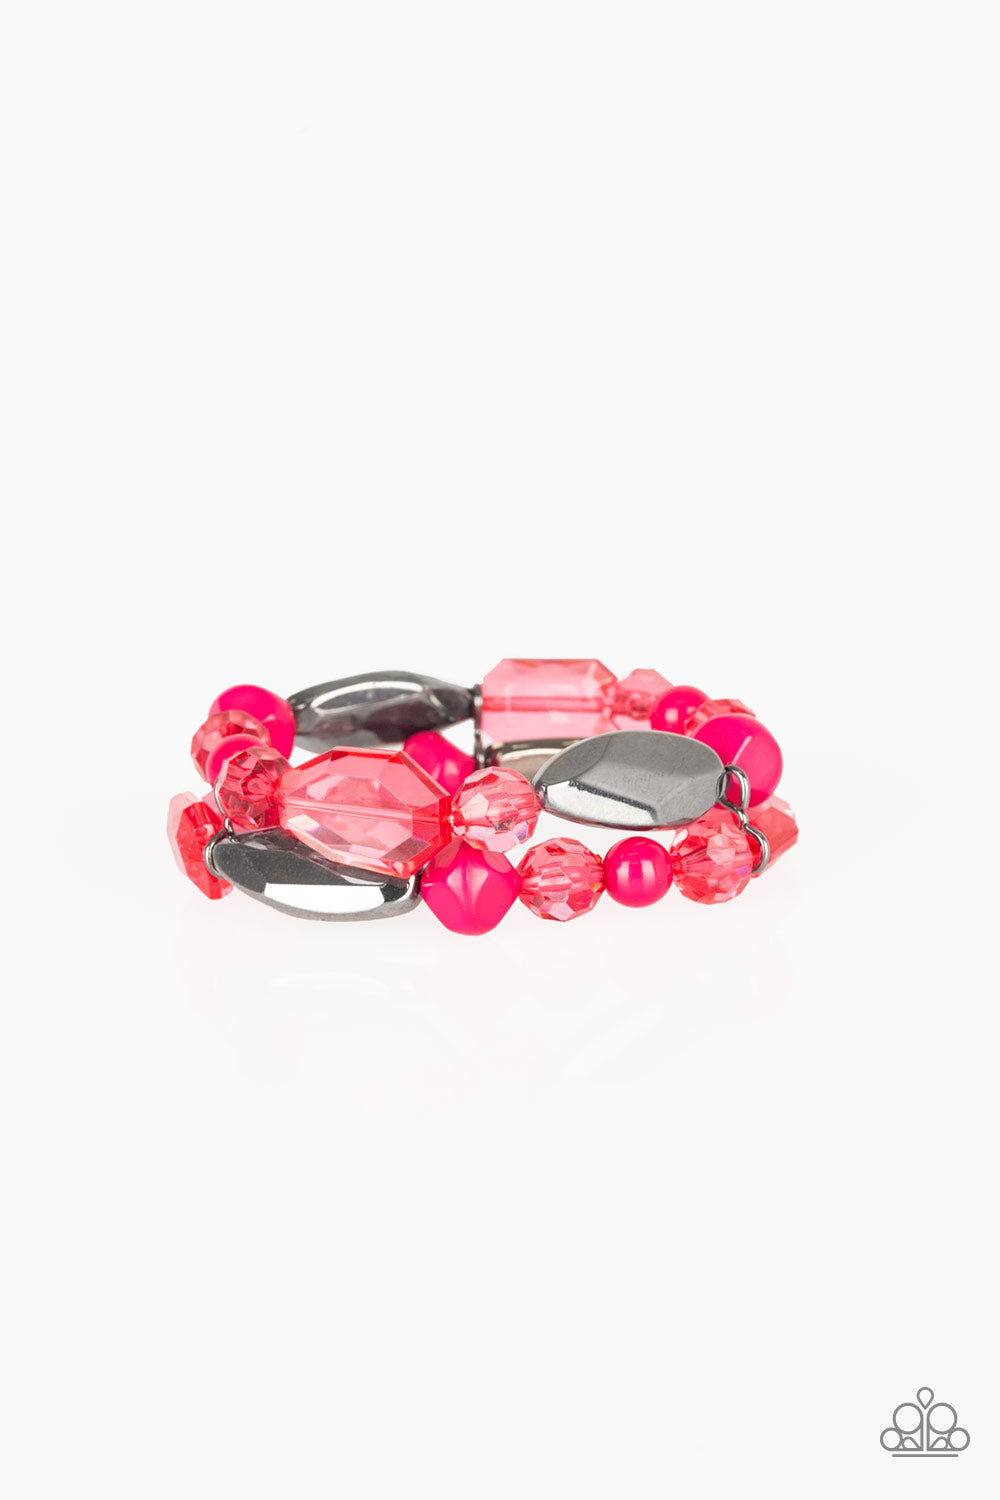 Rockin Rock Candy Bracelet (Pink, Red)